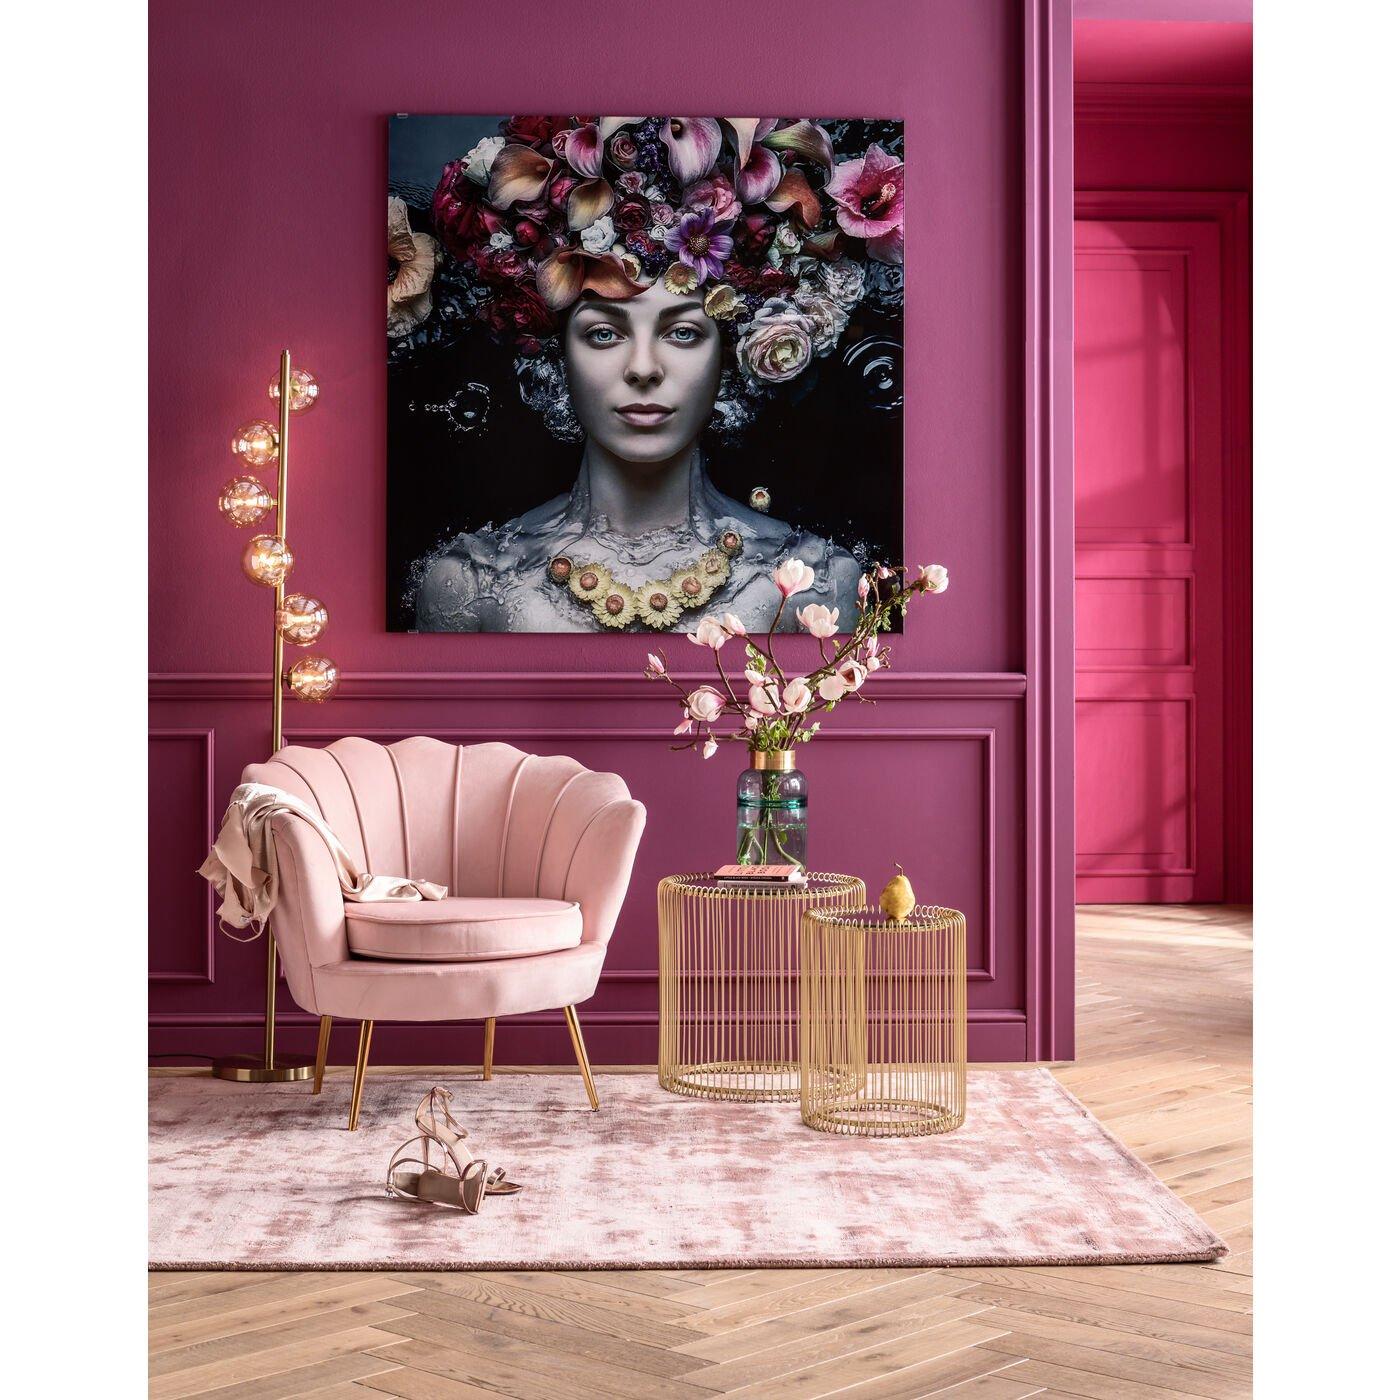 KARE Design Bild Glas Flower Art Lady 120x120cm  